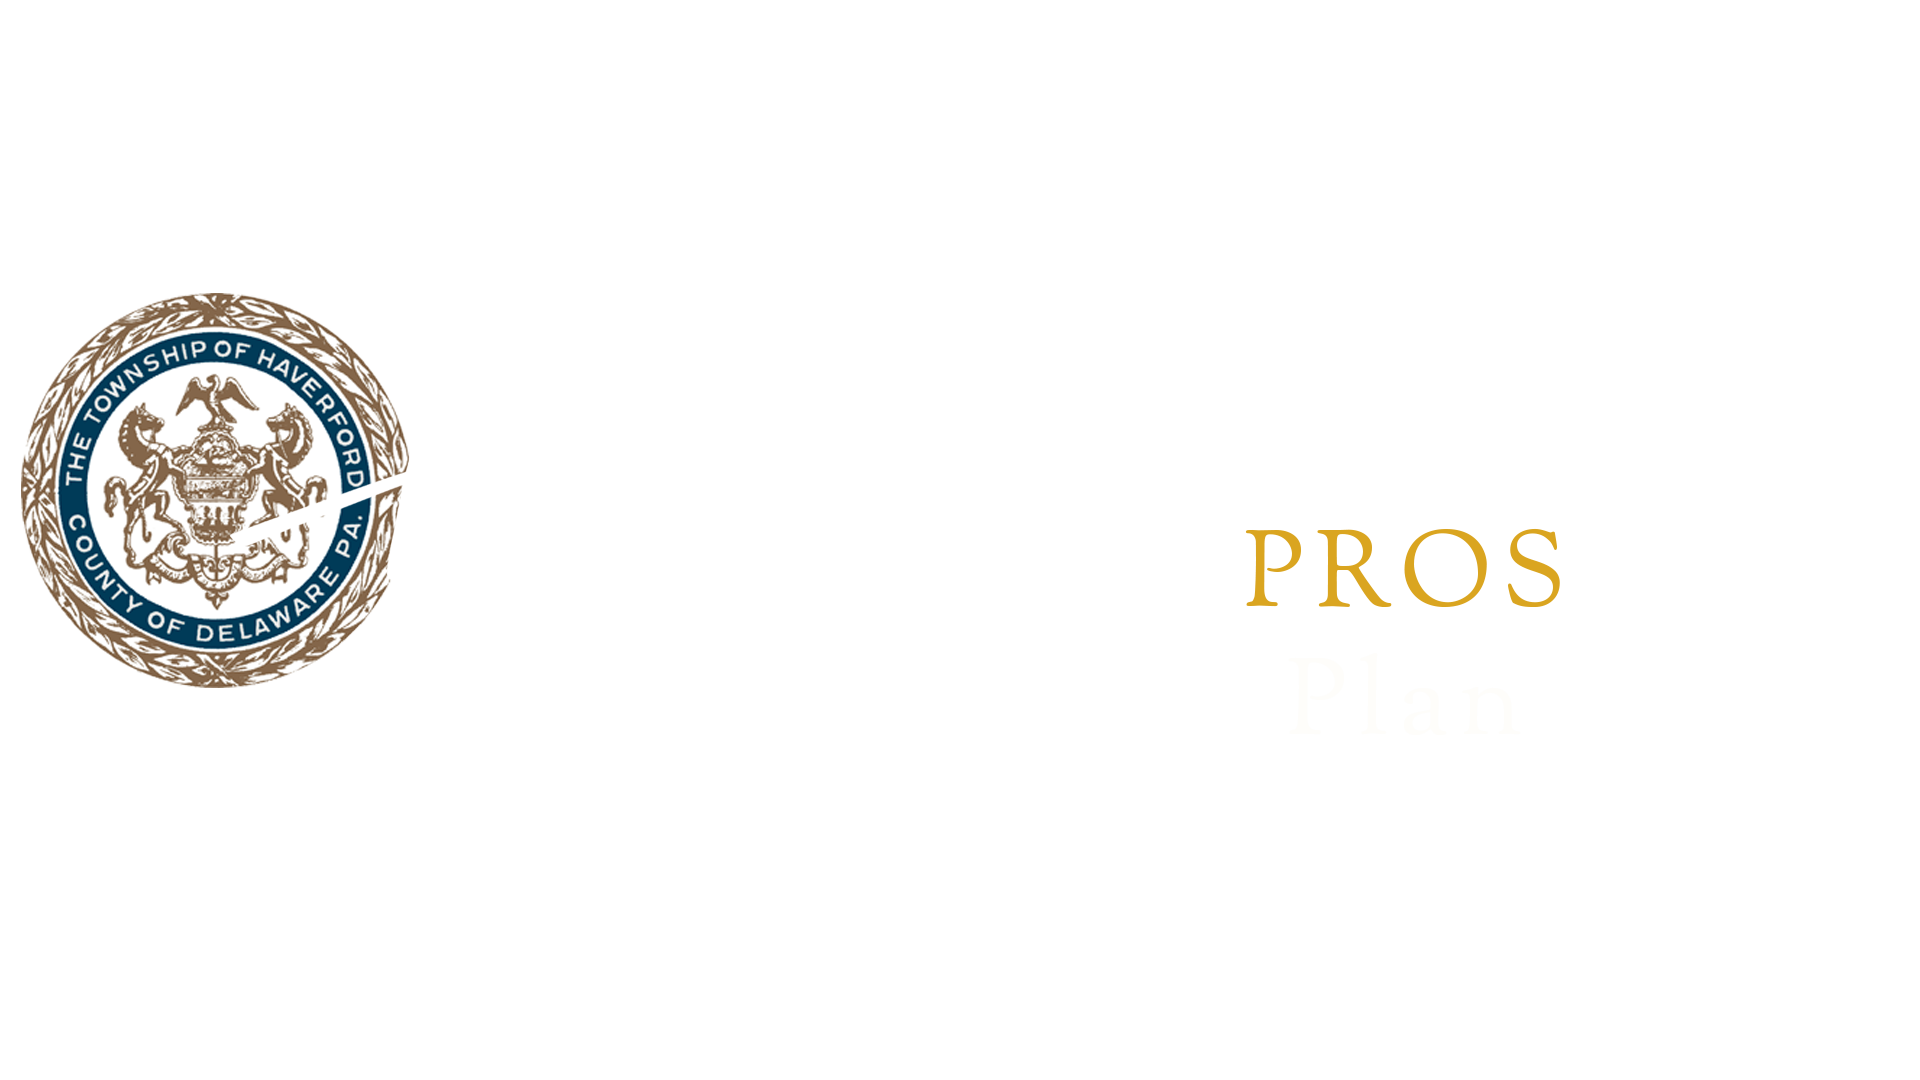 Haverford Township PROS Plan